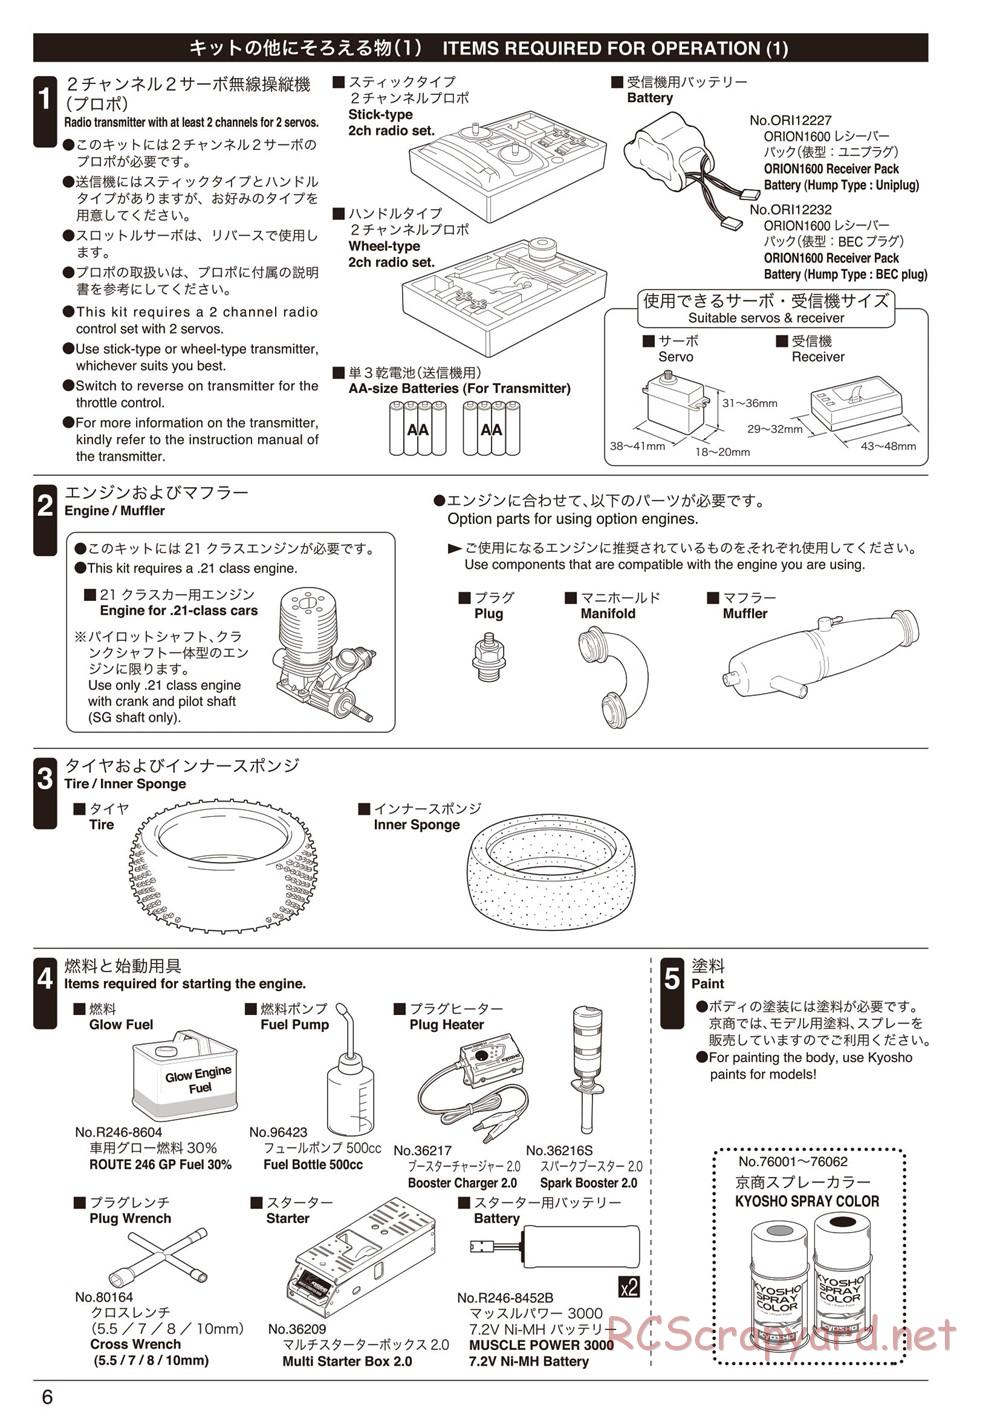 Kyosho - Inferno MP9 TKI4 - Manual - Page 6